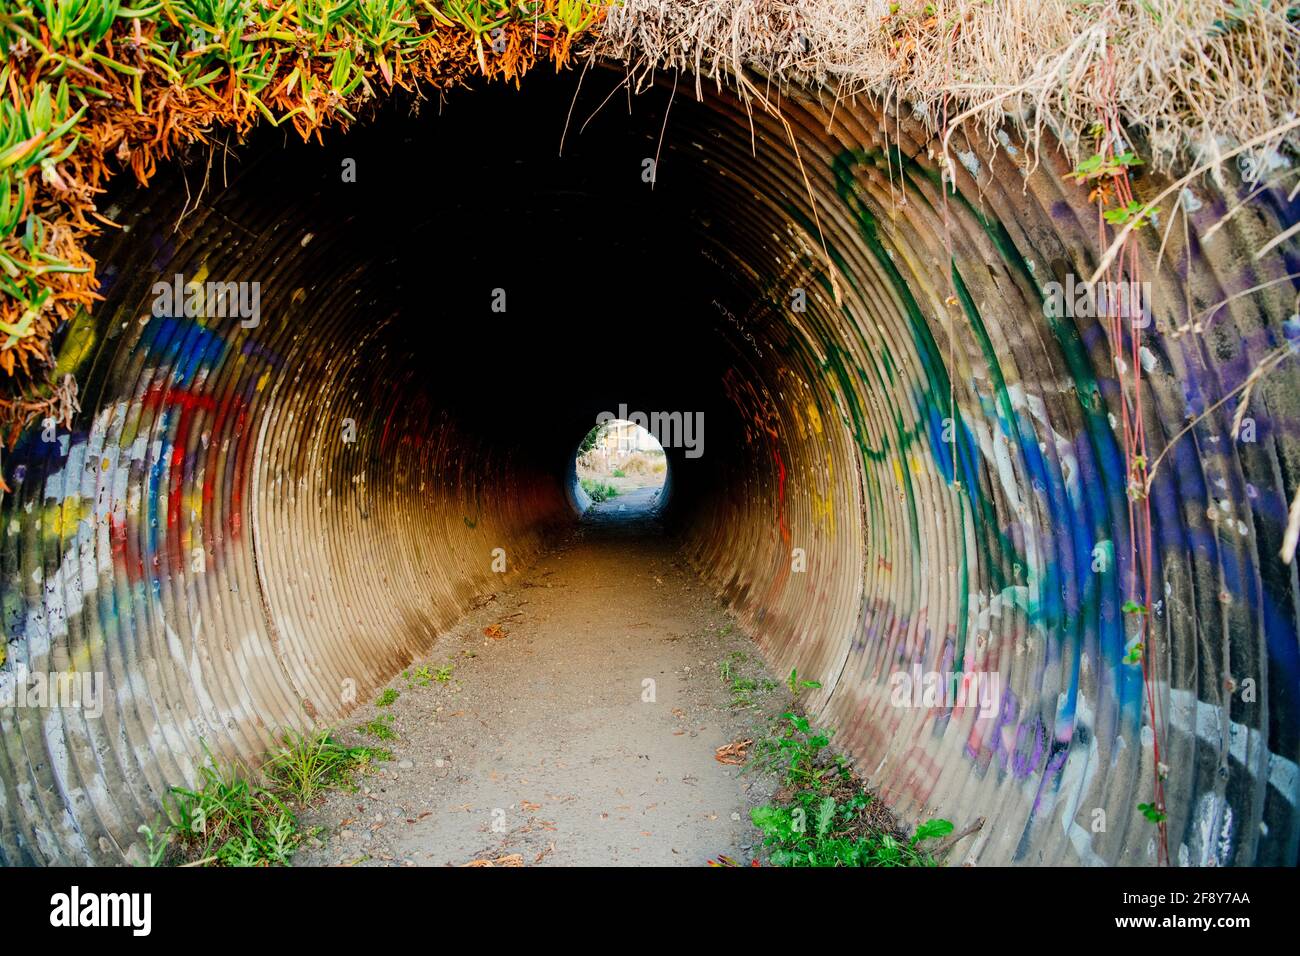 Graffiti Covered drain Pipe Walk Way, fort Bragg, Californie, États-Unis Banque D'Images